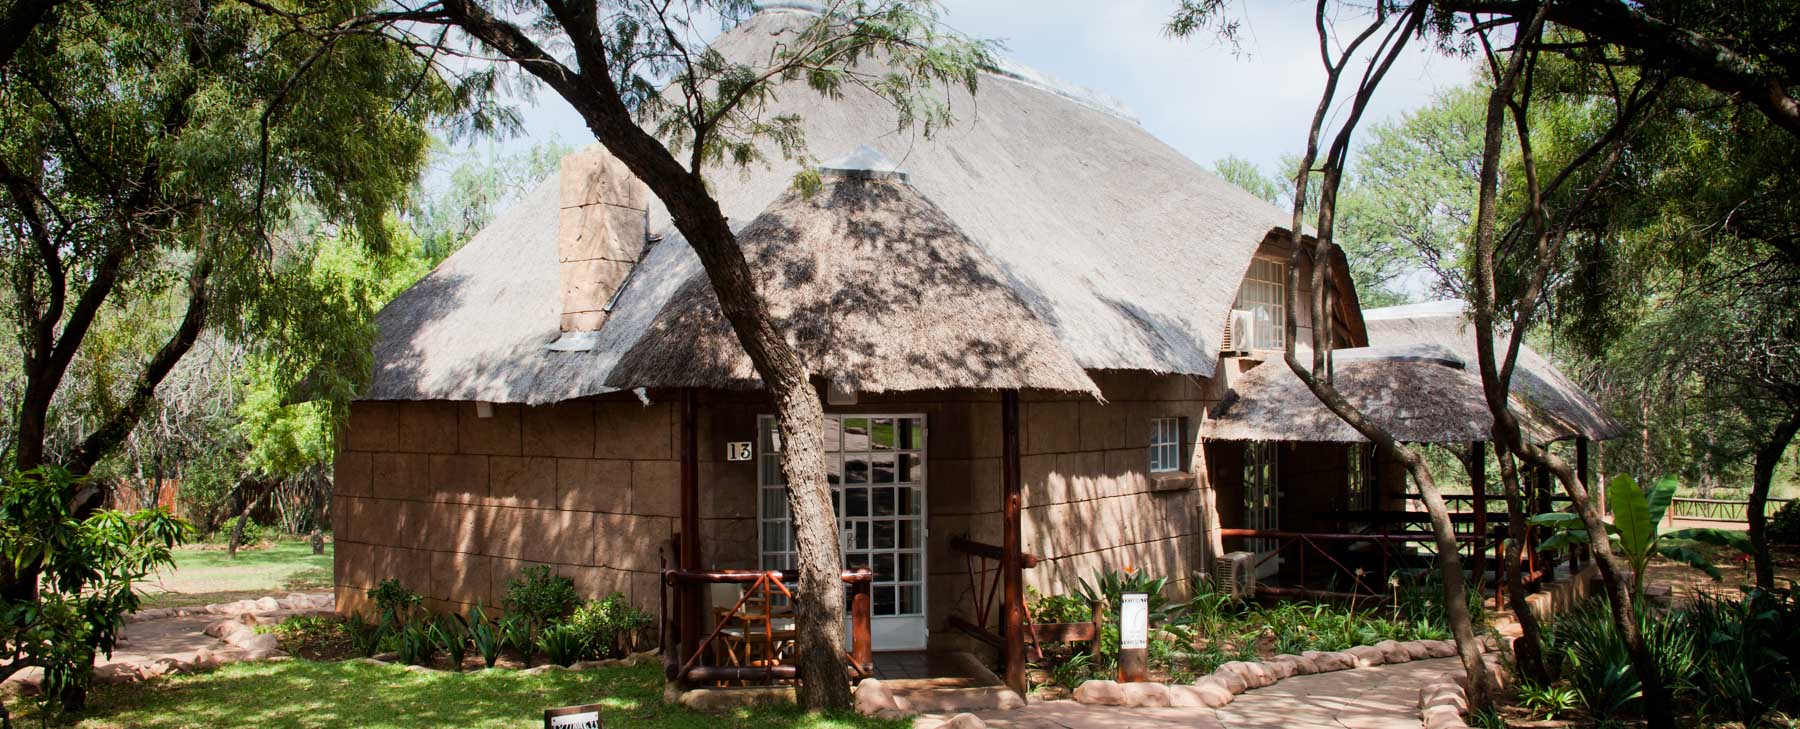 Zebra Country Lodge In Mpumalanga South Africa Glampingcom - 